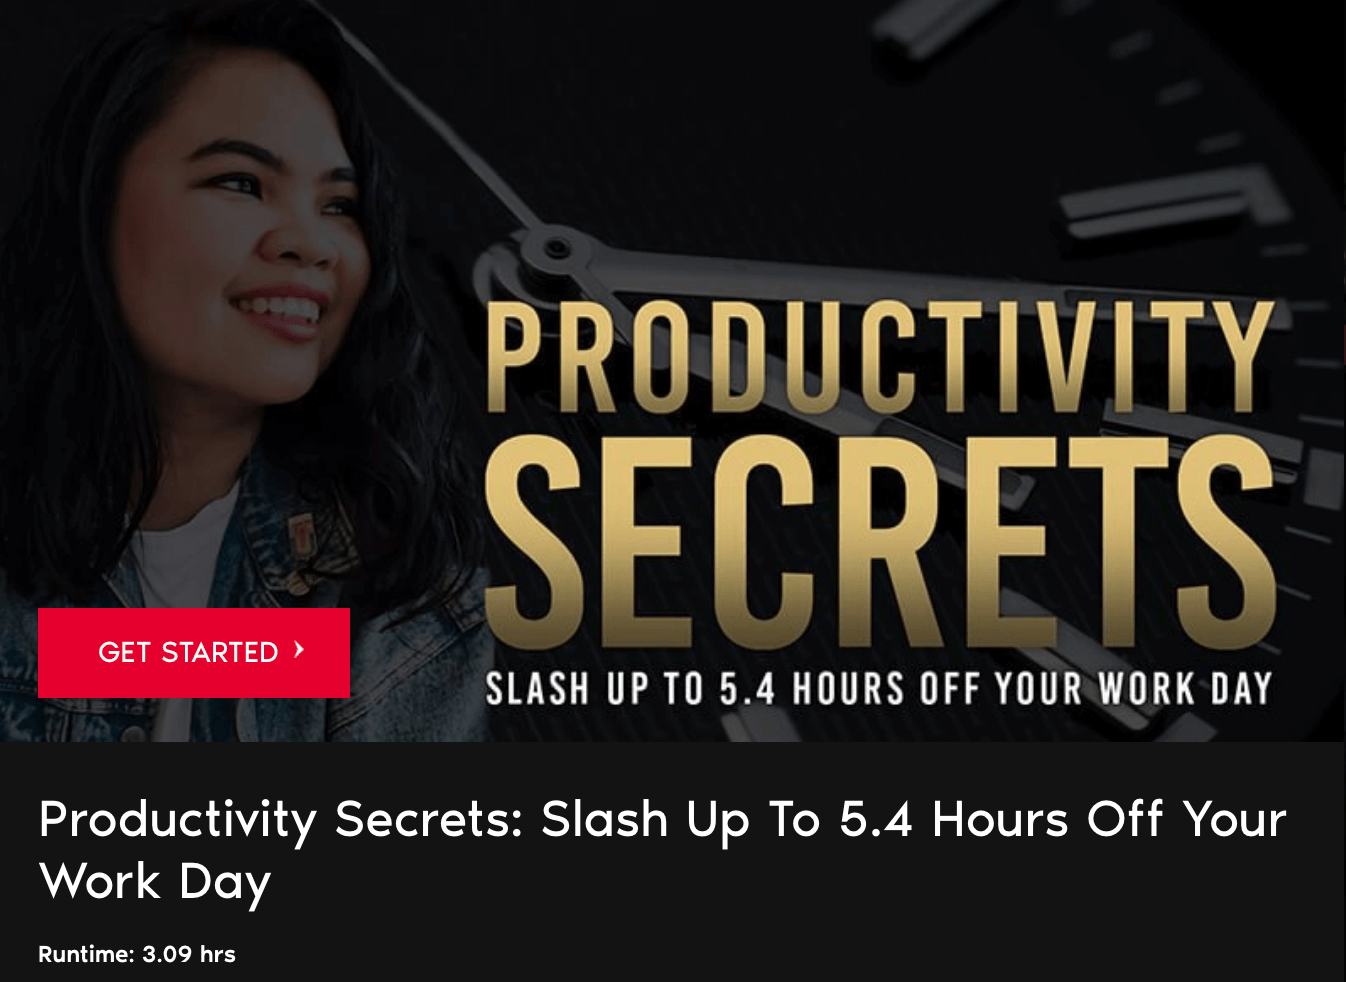 Productivity Secrets | The Freelance Movement